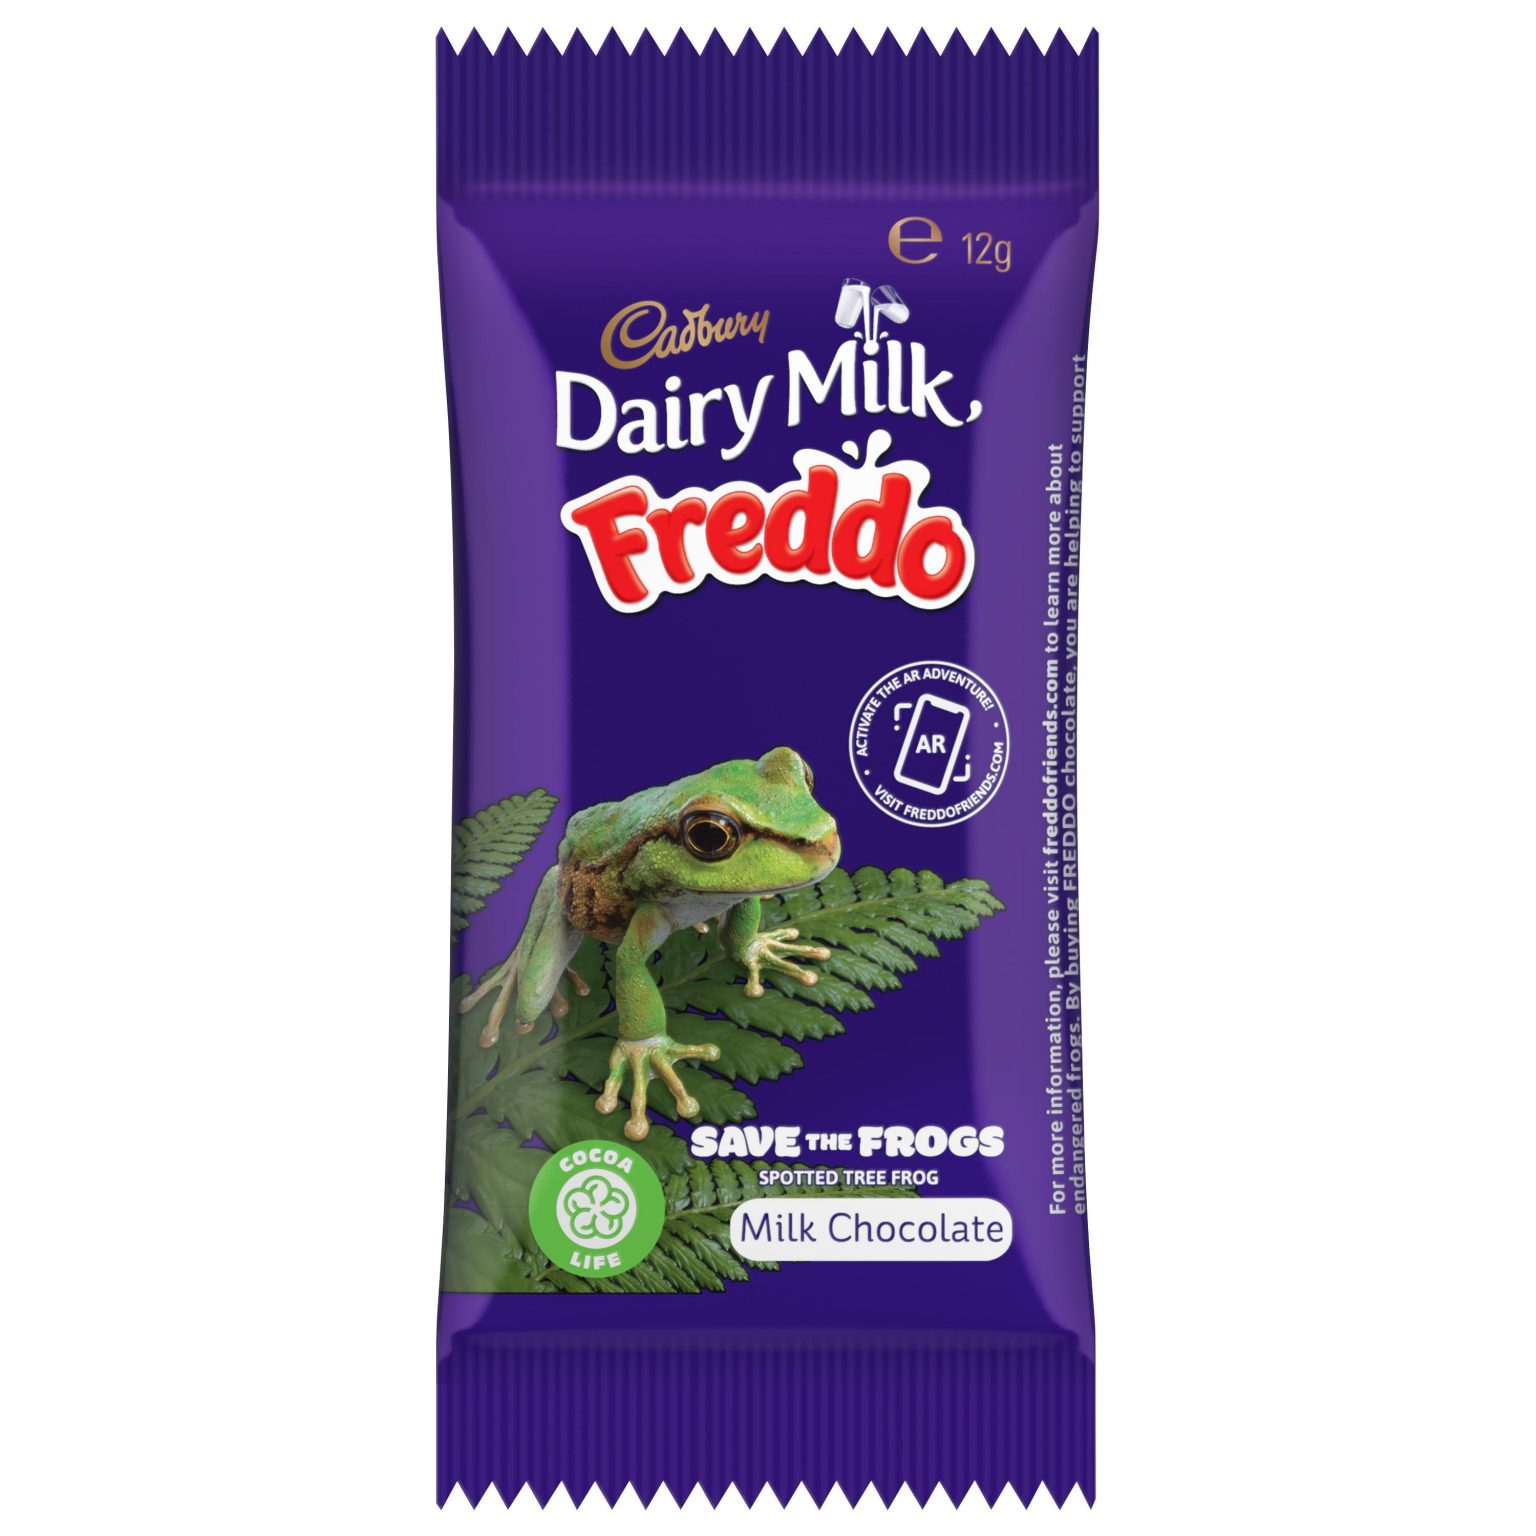 Cadbury Dairy Milk Freddo 12g The Spotted Tree Frog 1536x1536 